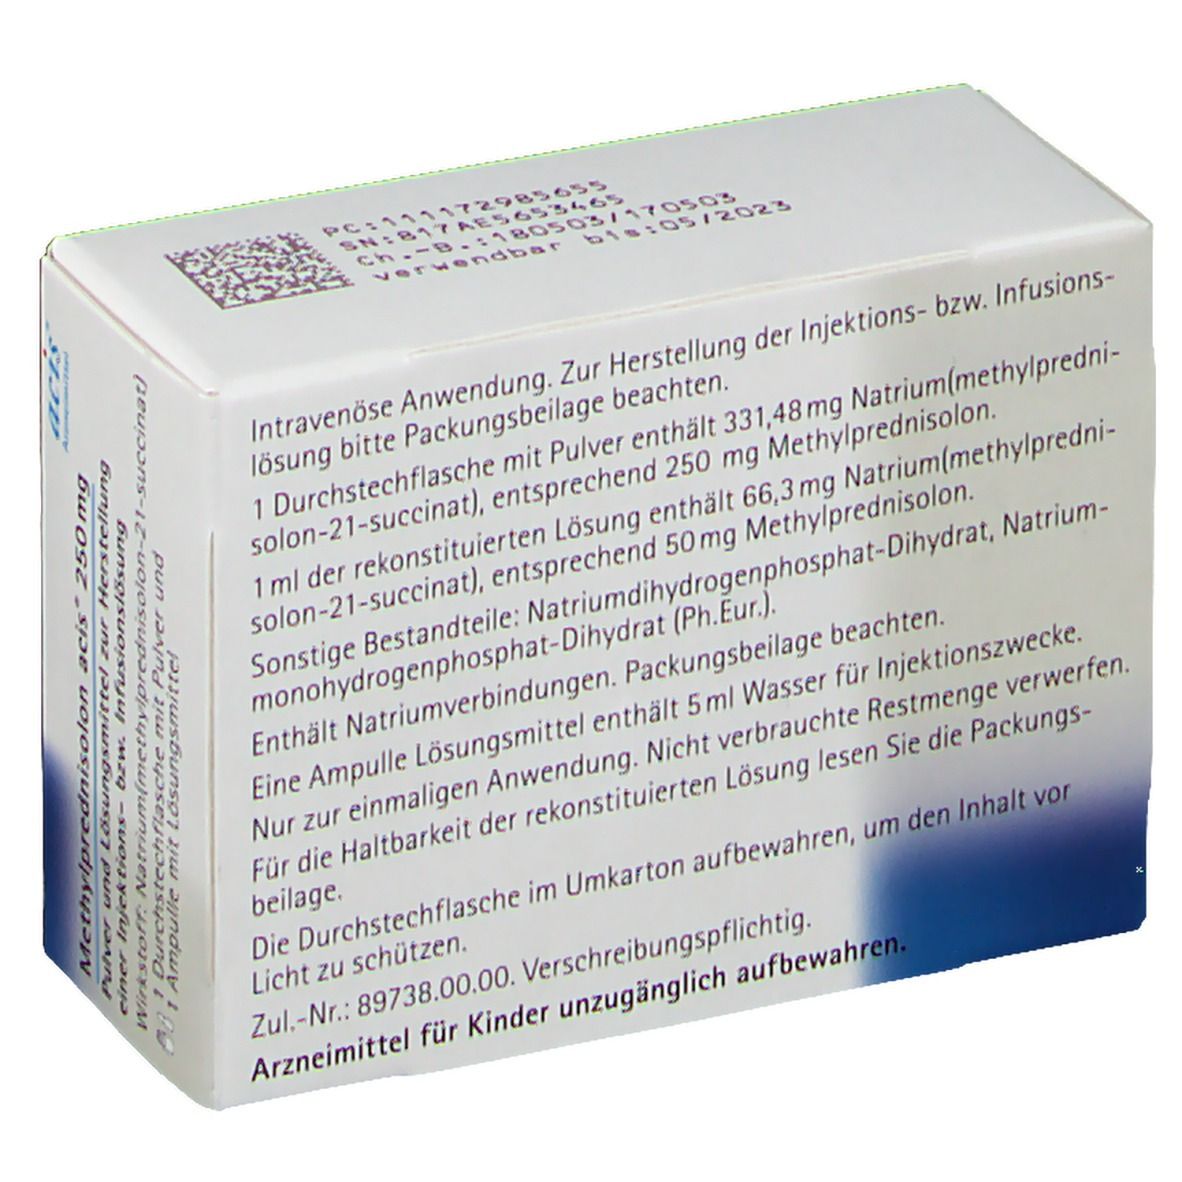 Methylprednisolon Ac 250Mg